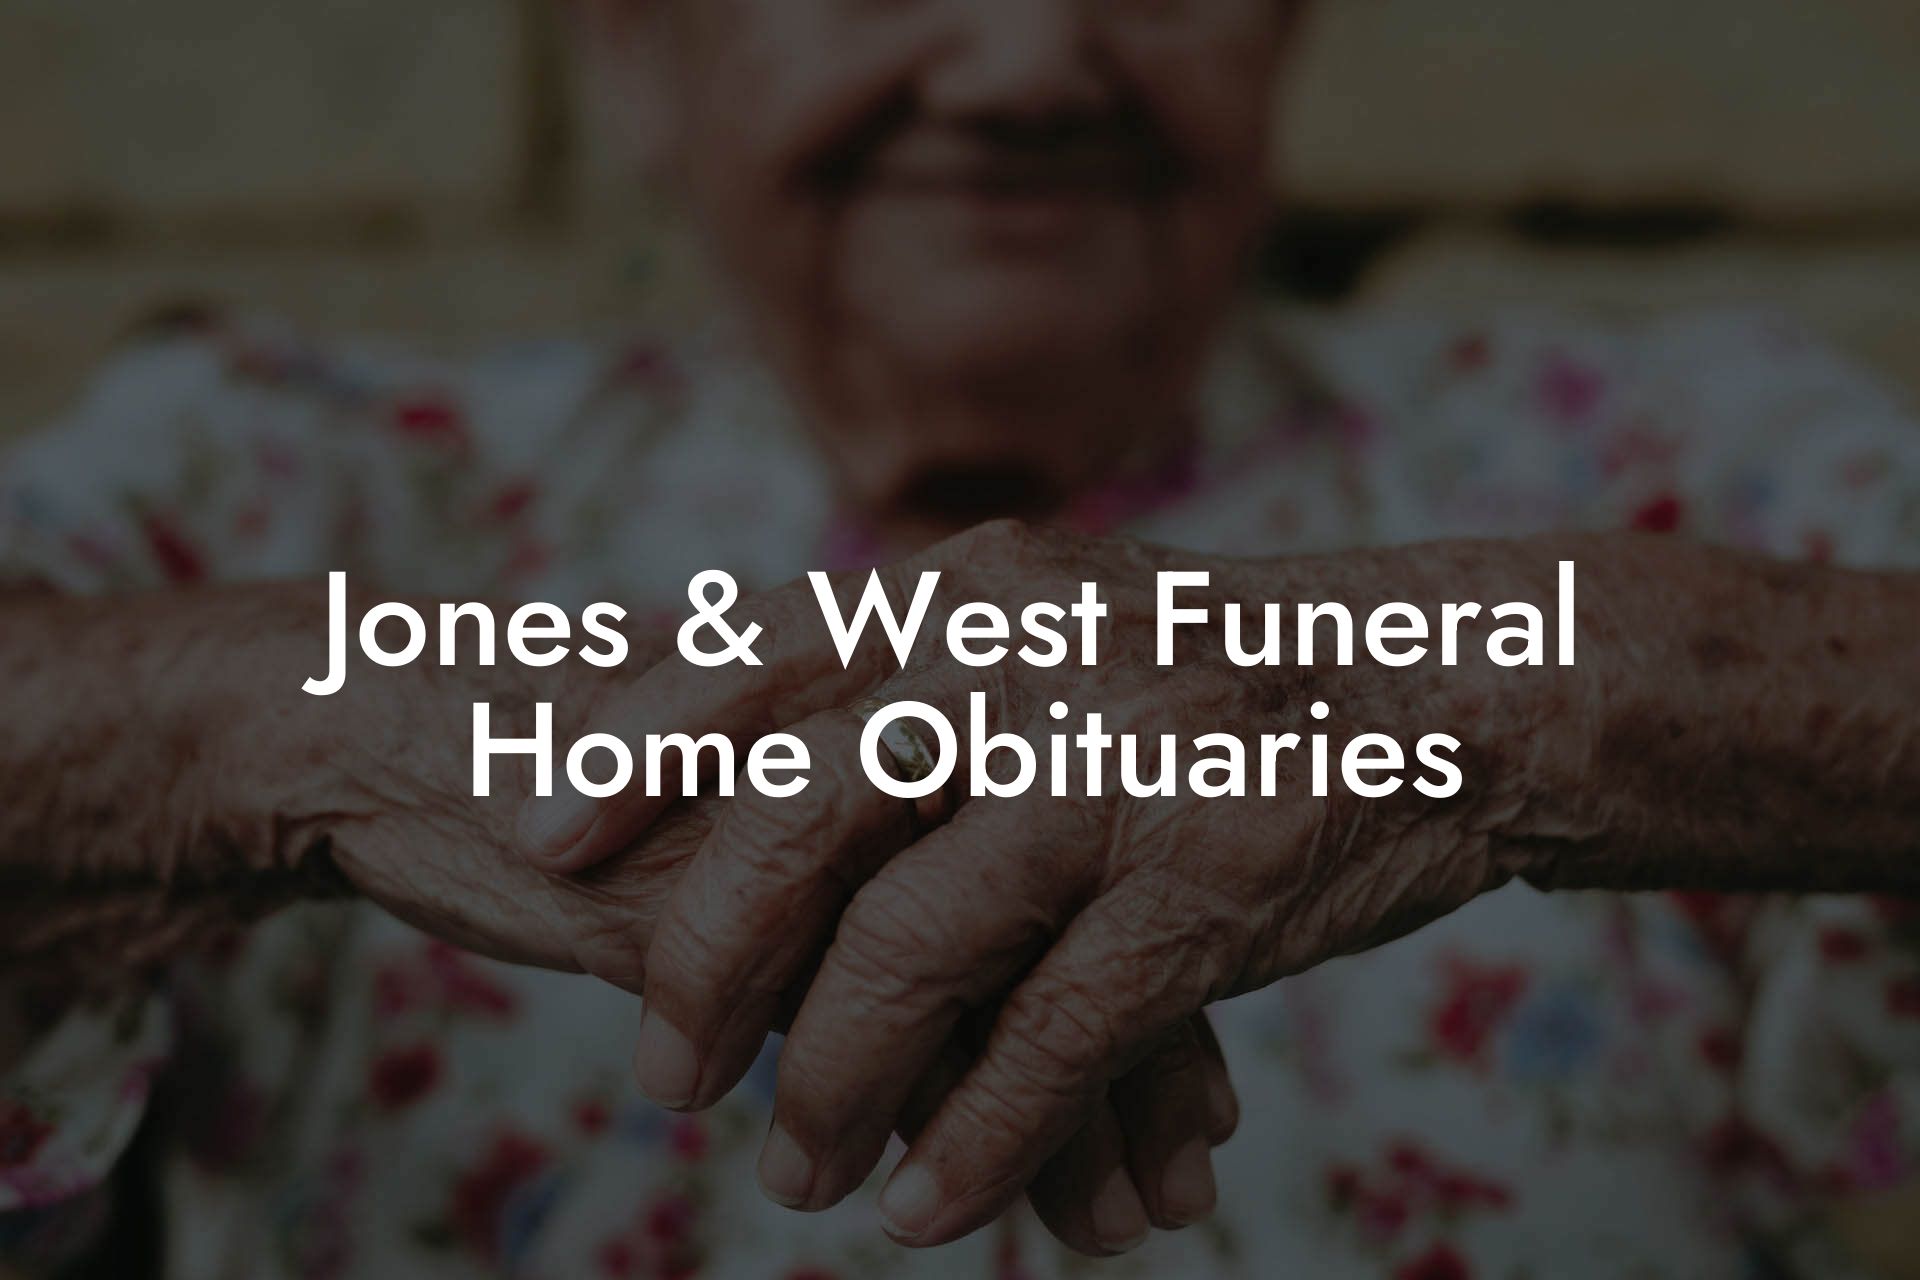 Jones & West Funeral Home Obituaries